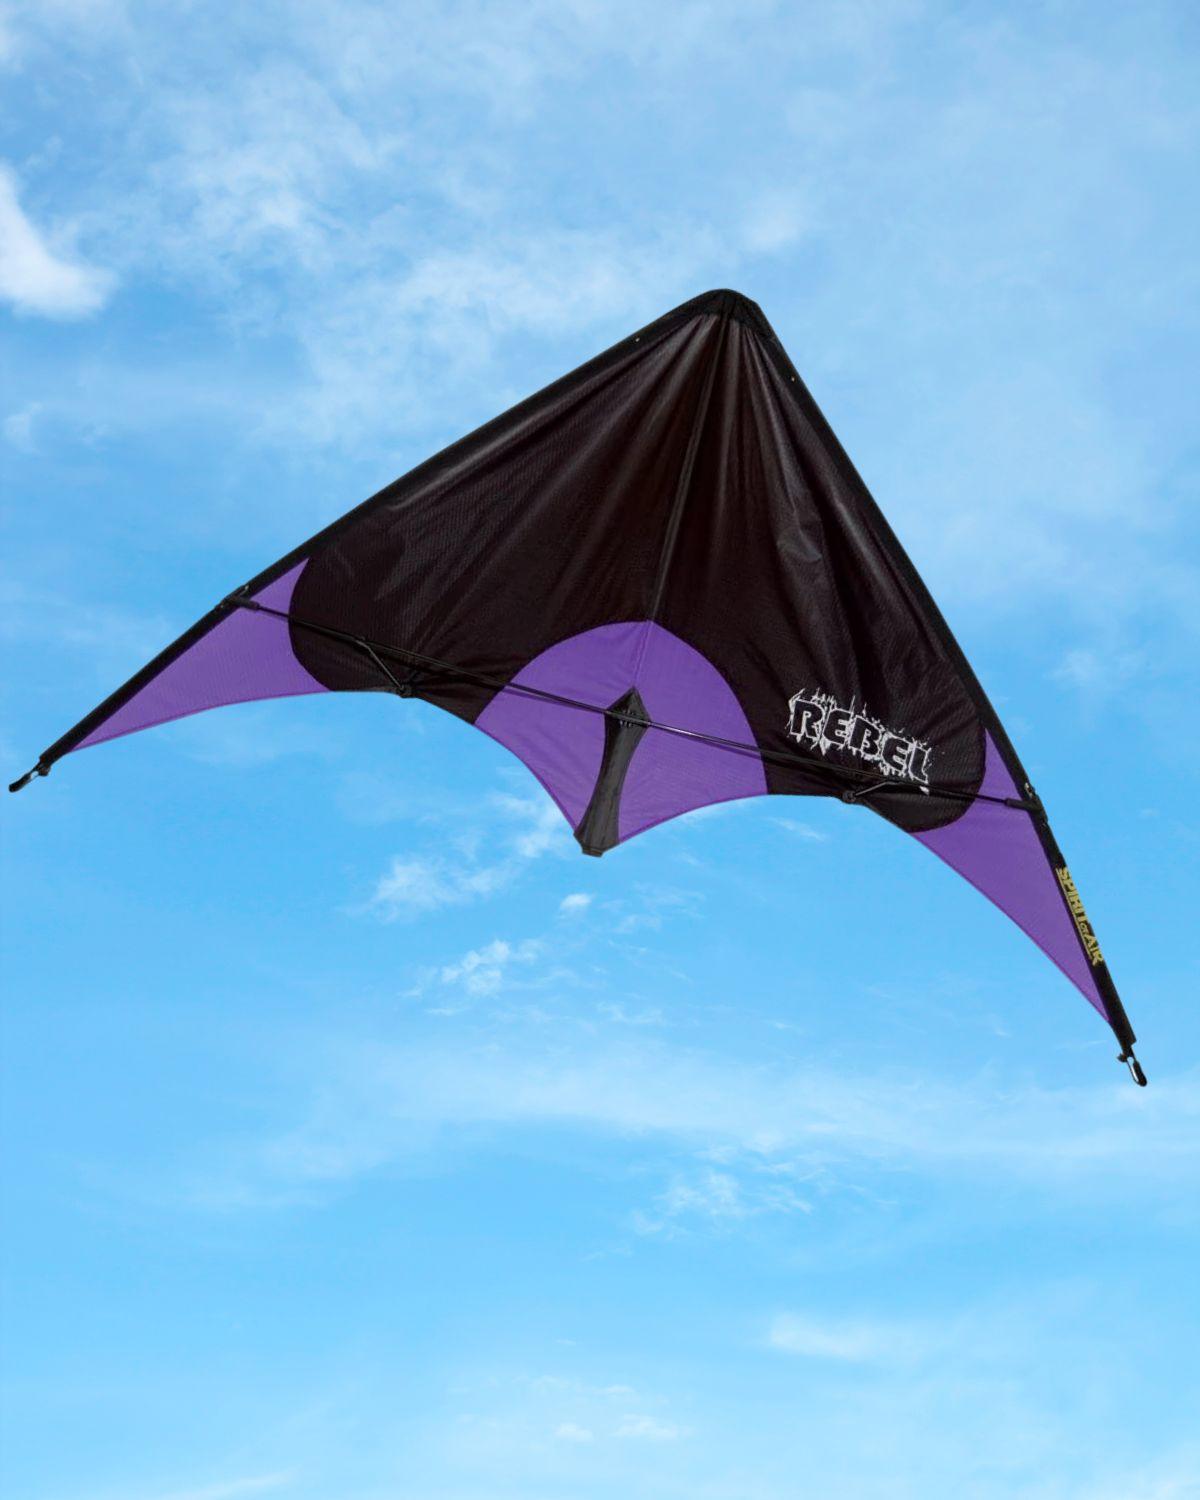 Black and purple sport kite. Blue sky background.